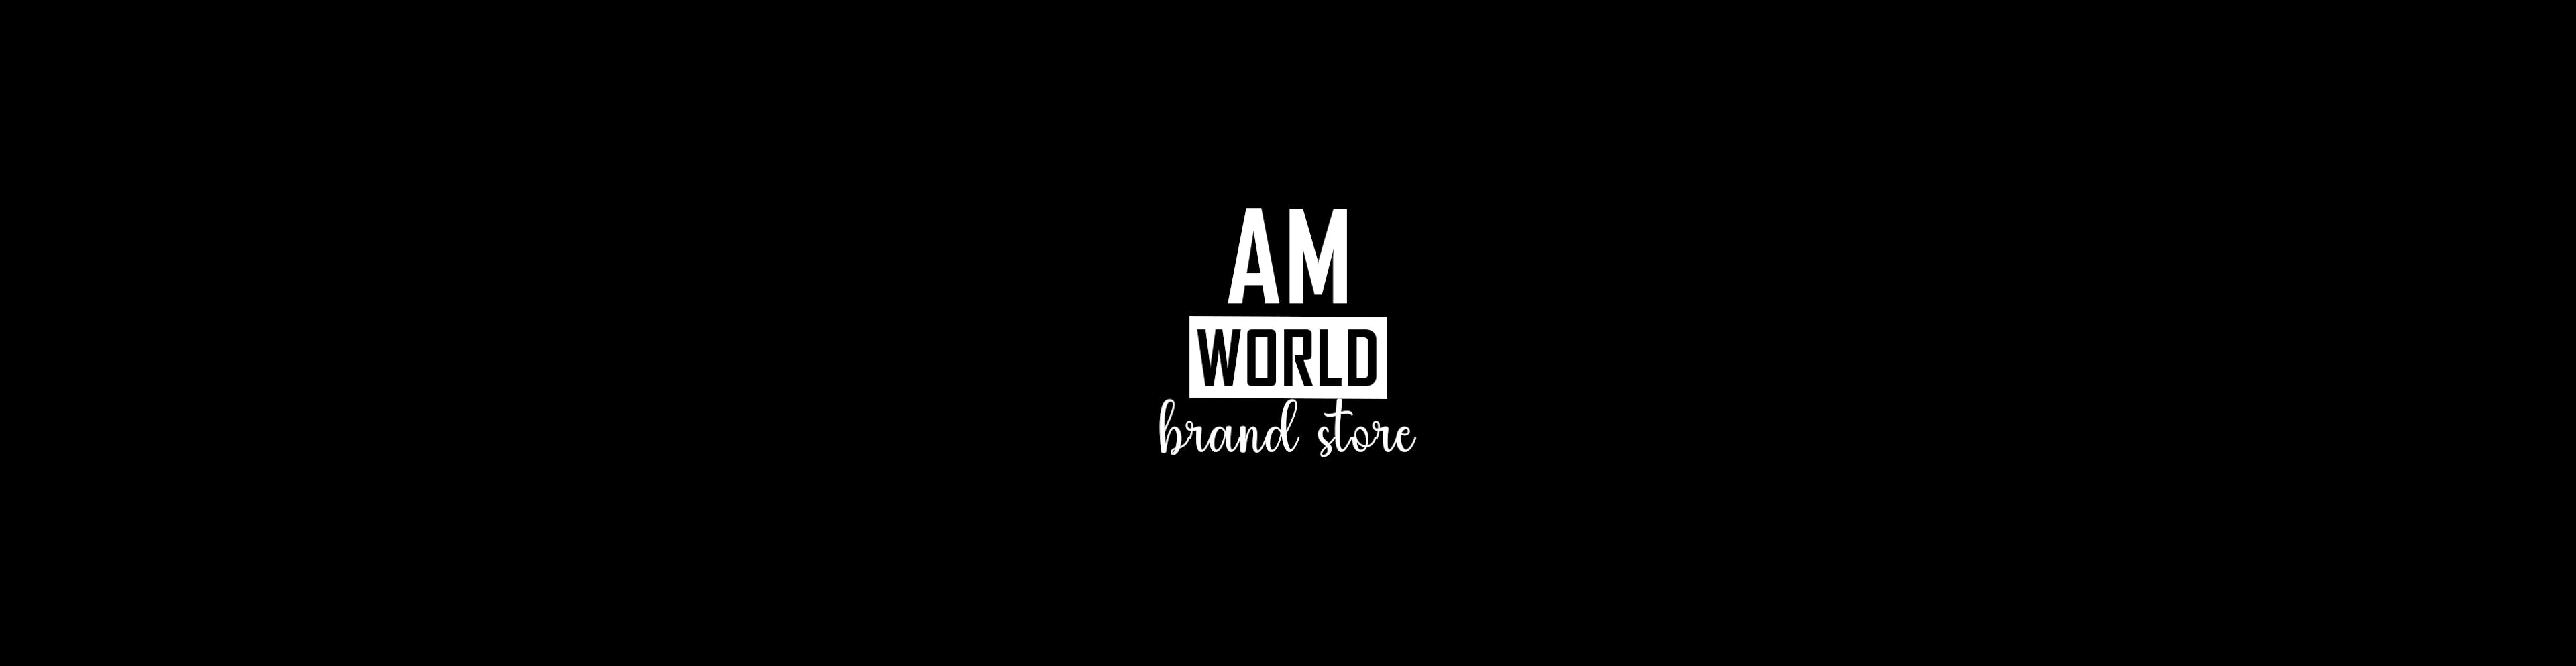 AM World Brand Store